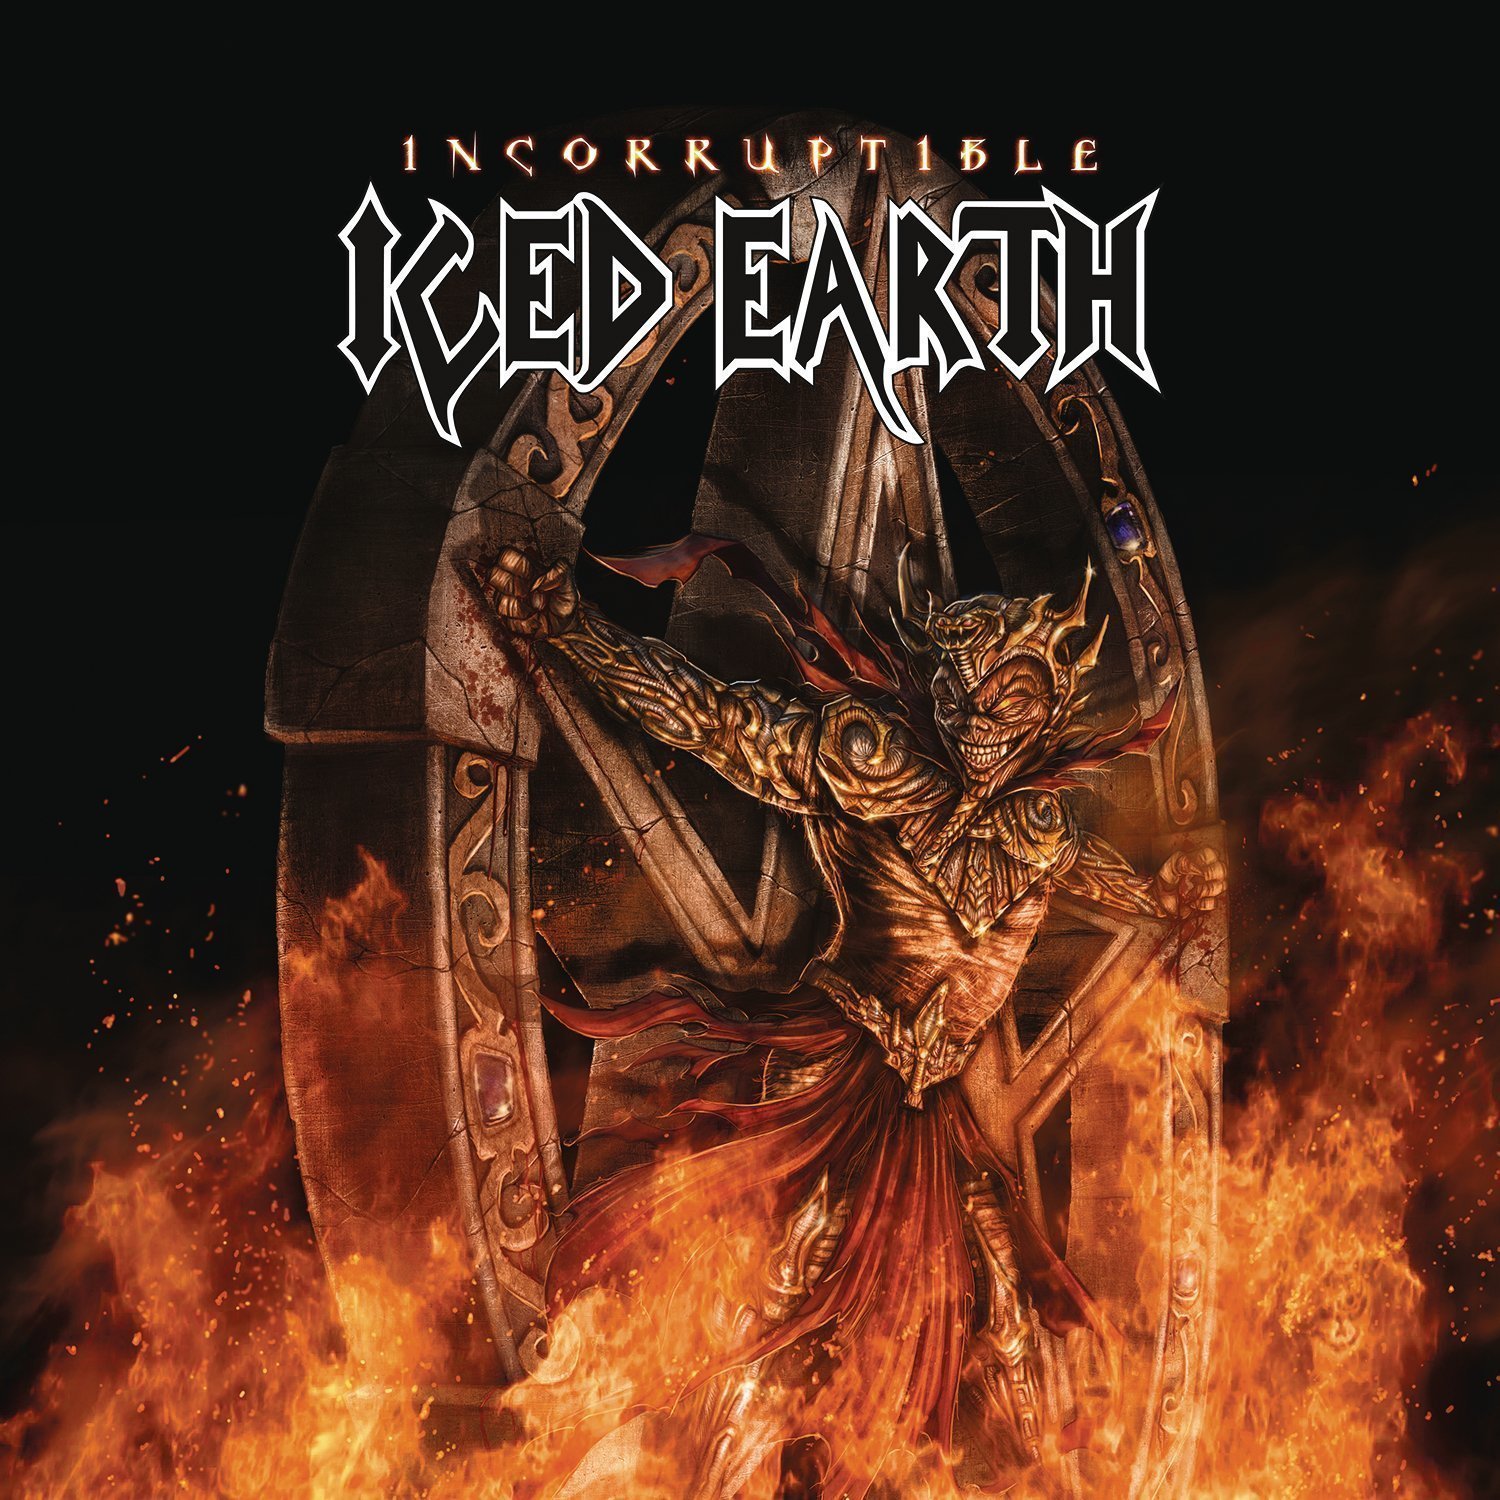 Disco de vinilo Iced Earth Incorruptible (2 LP)